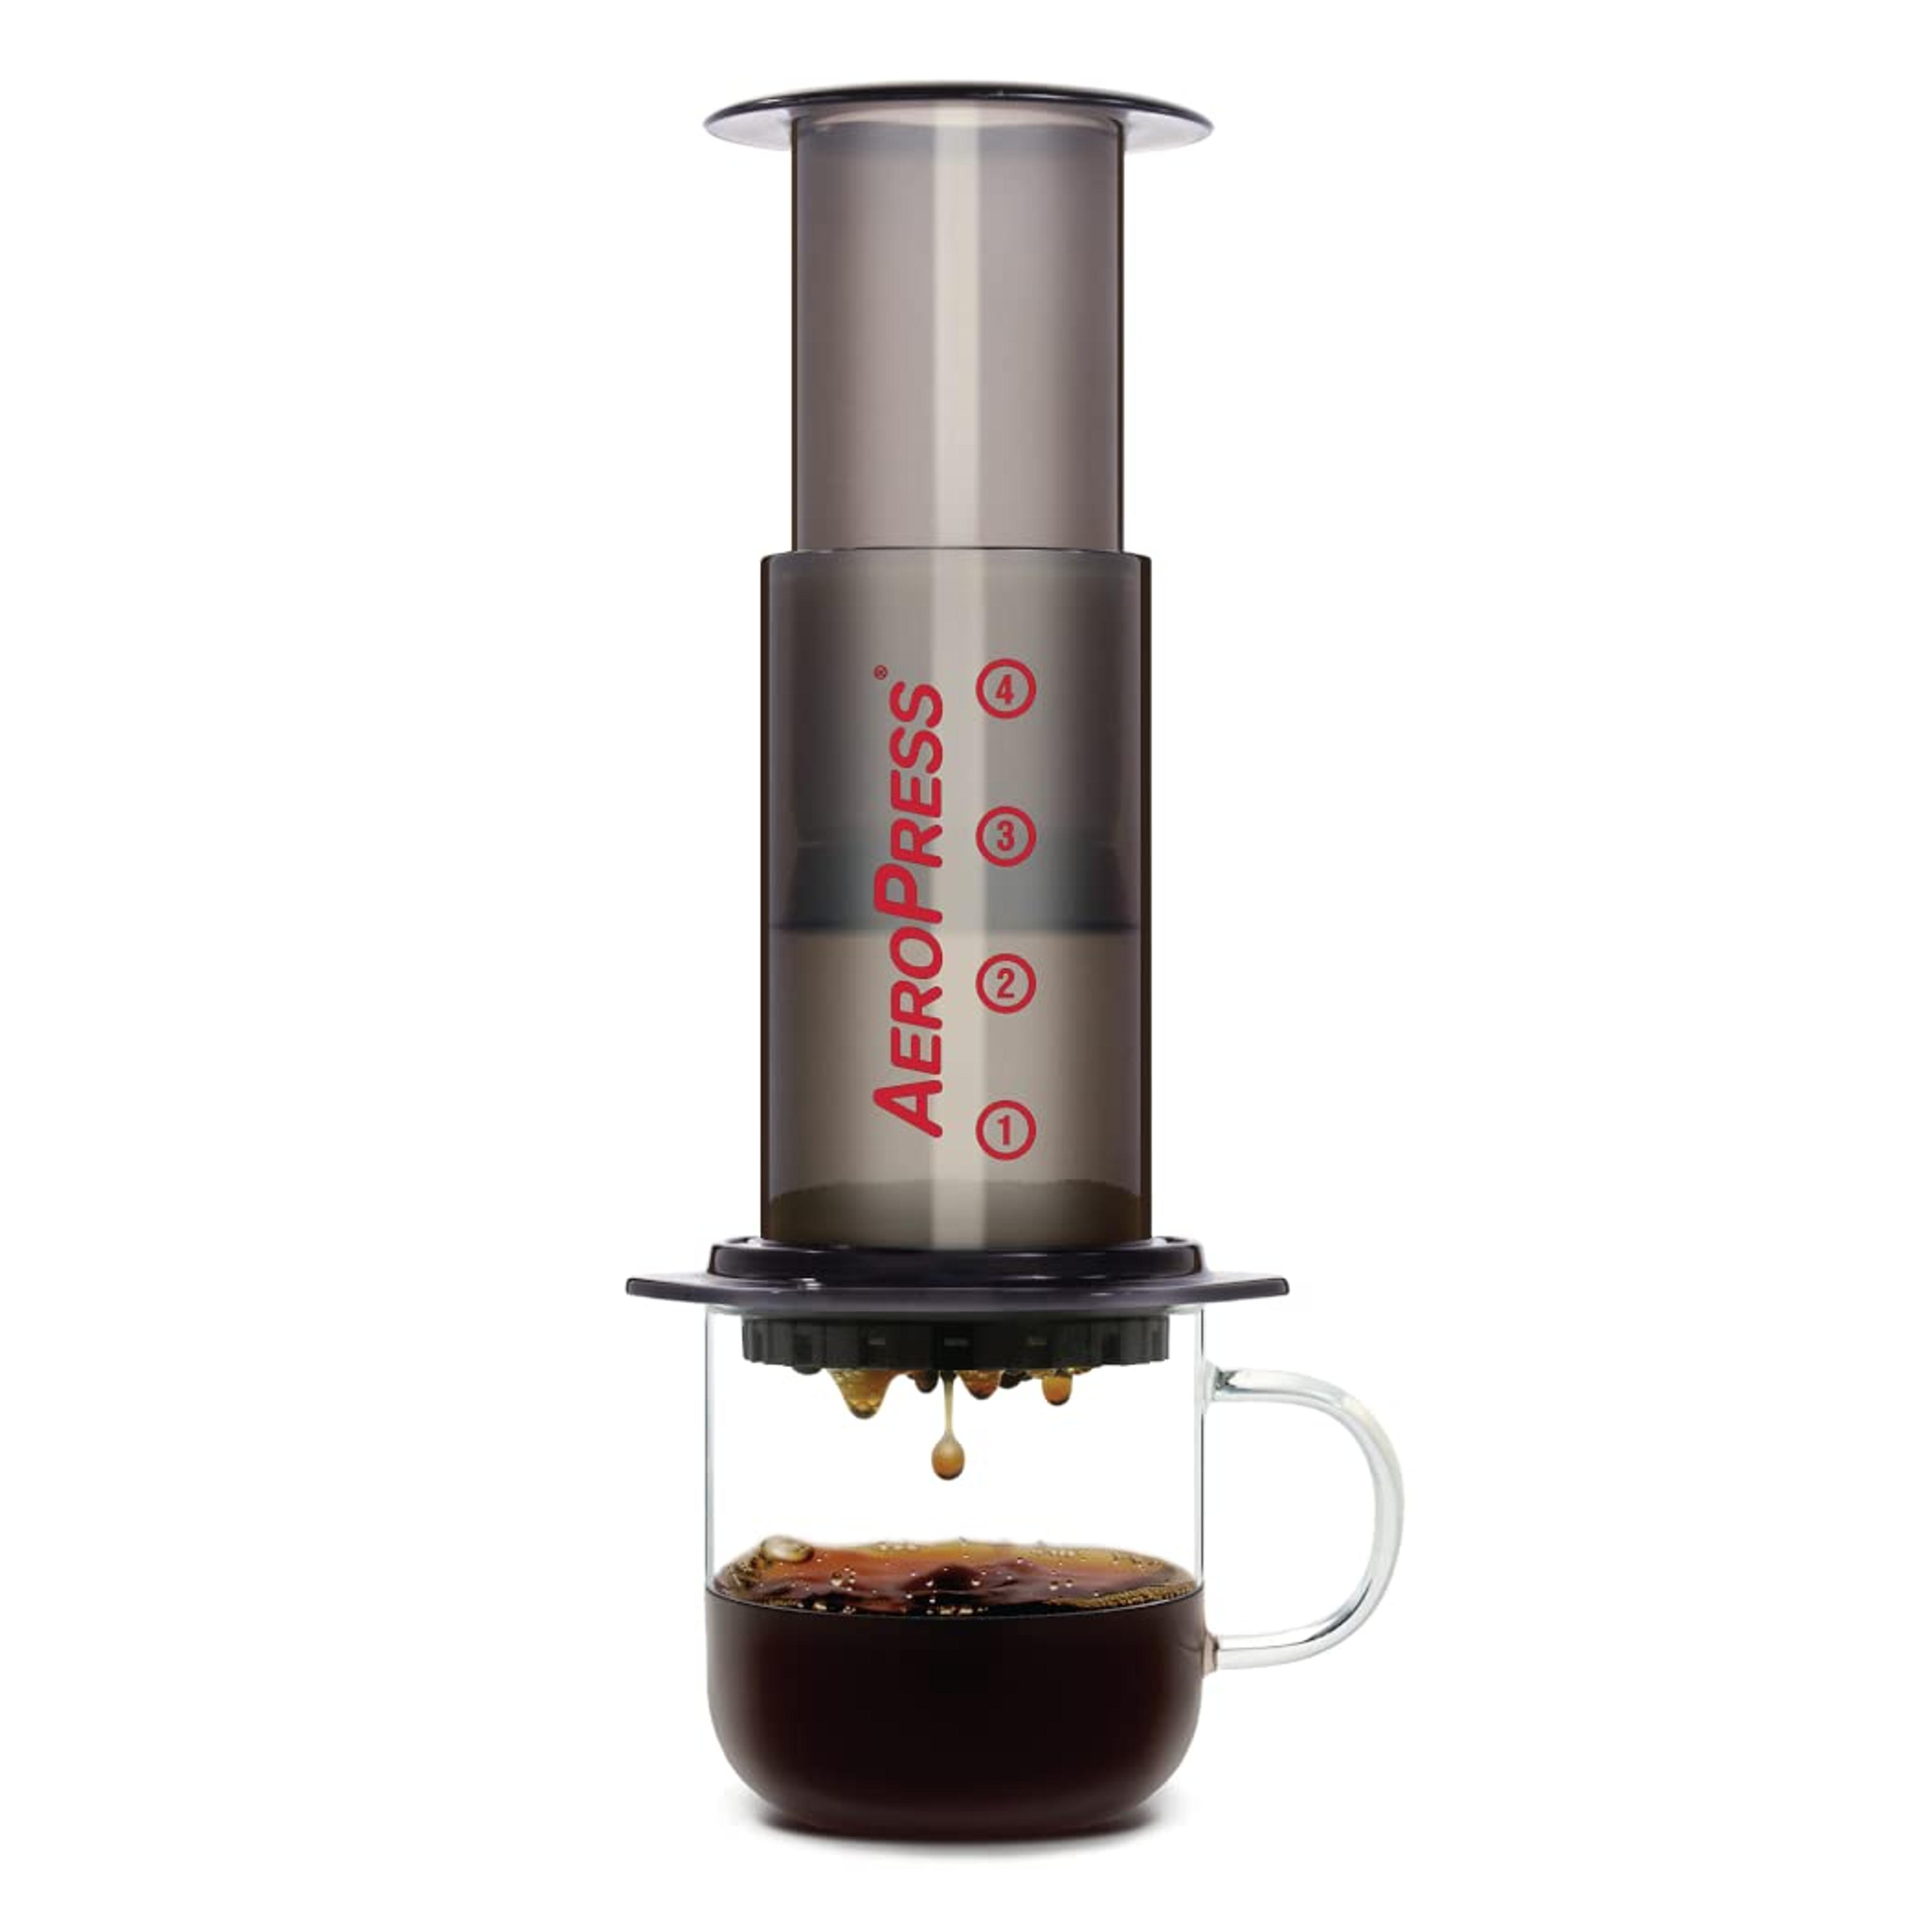 Amazon.com: AeroPress Original Coffee & Espresso Maker - Quickly makes delicious coffee without bitterness - 1 to 3 cups per pressing : Home & Kitchen